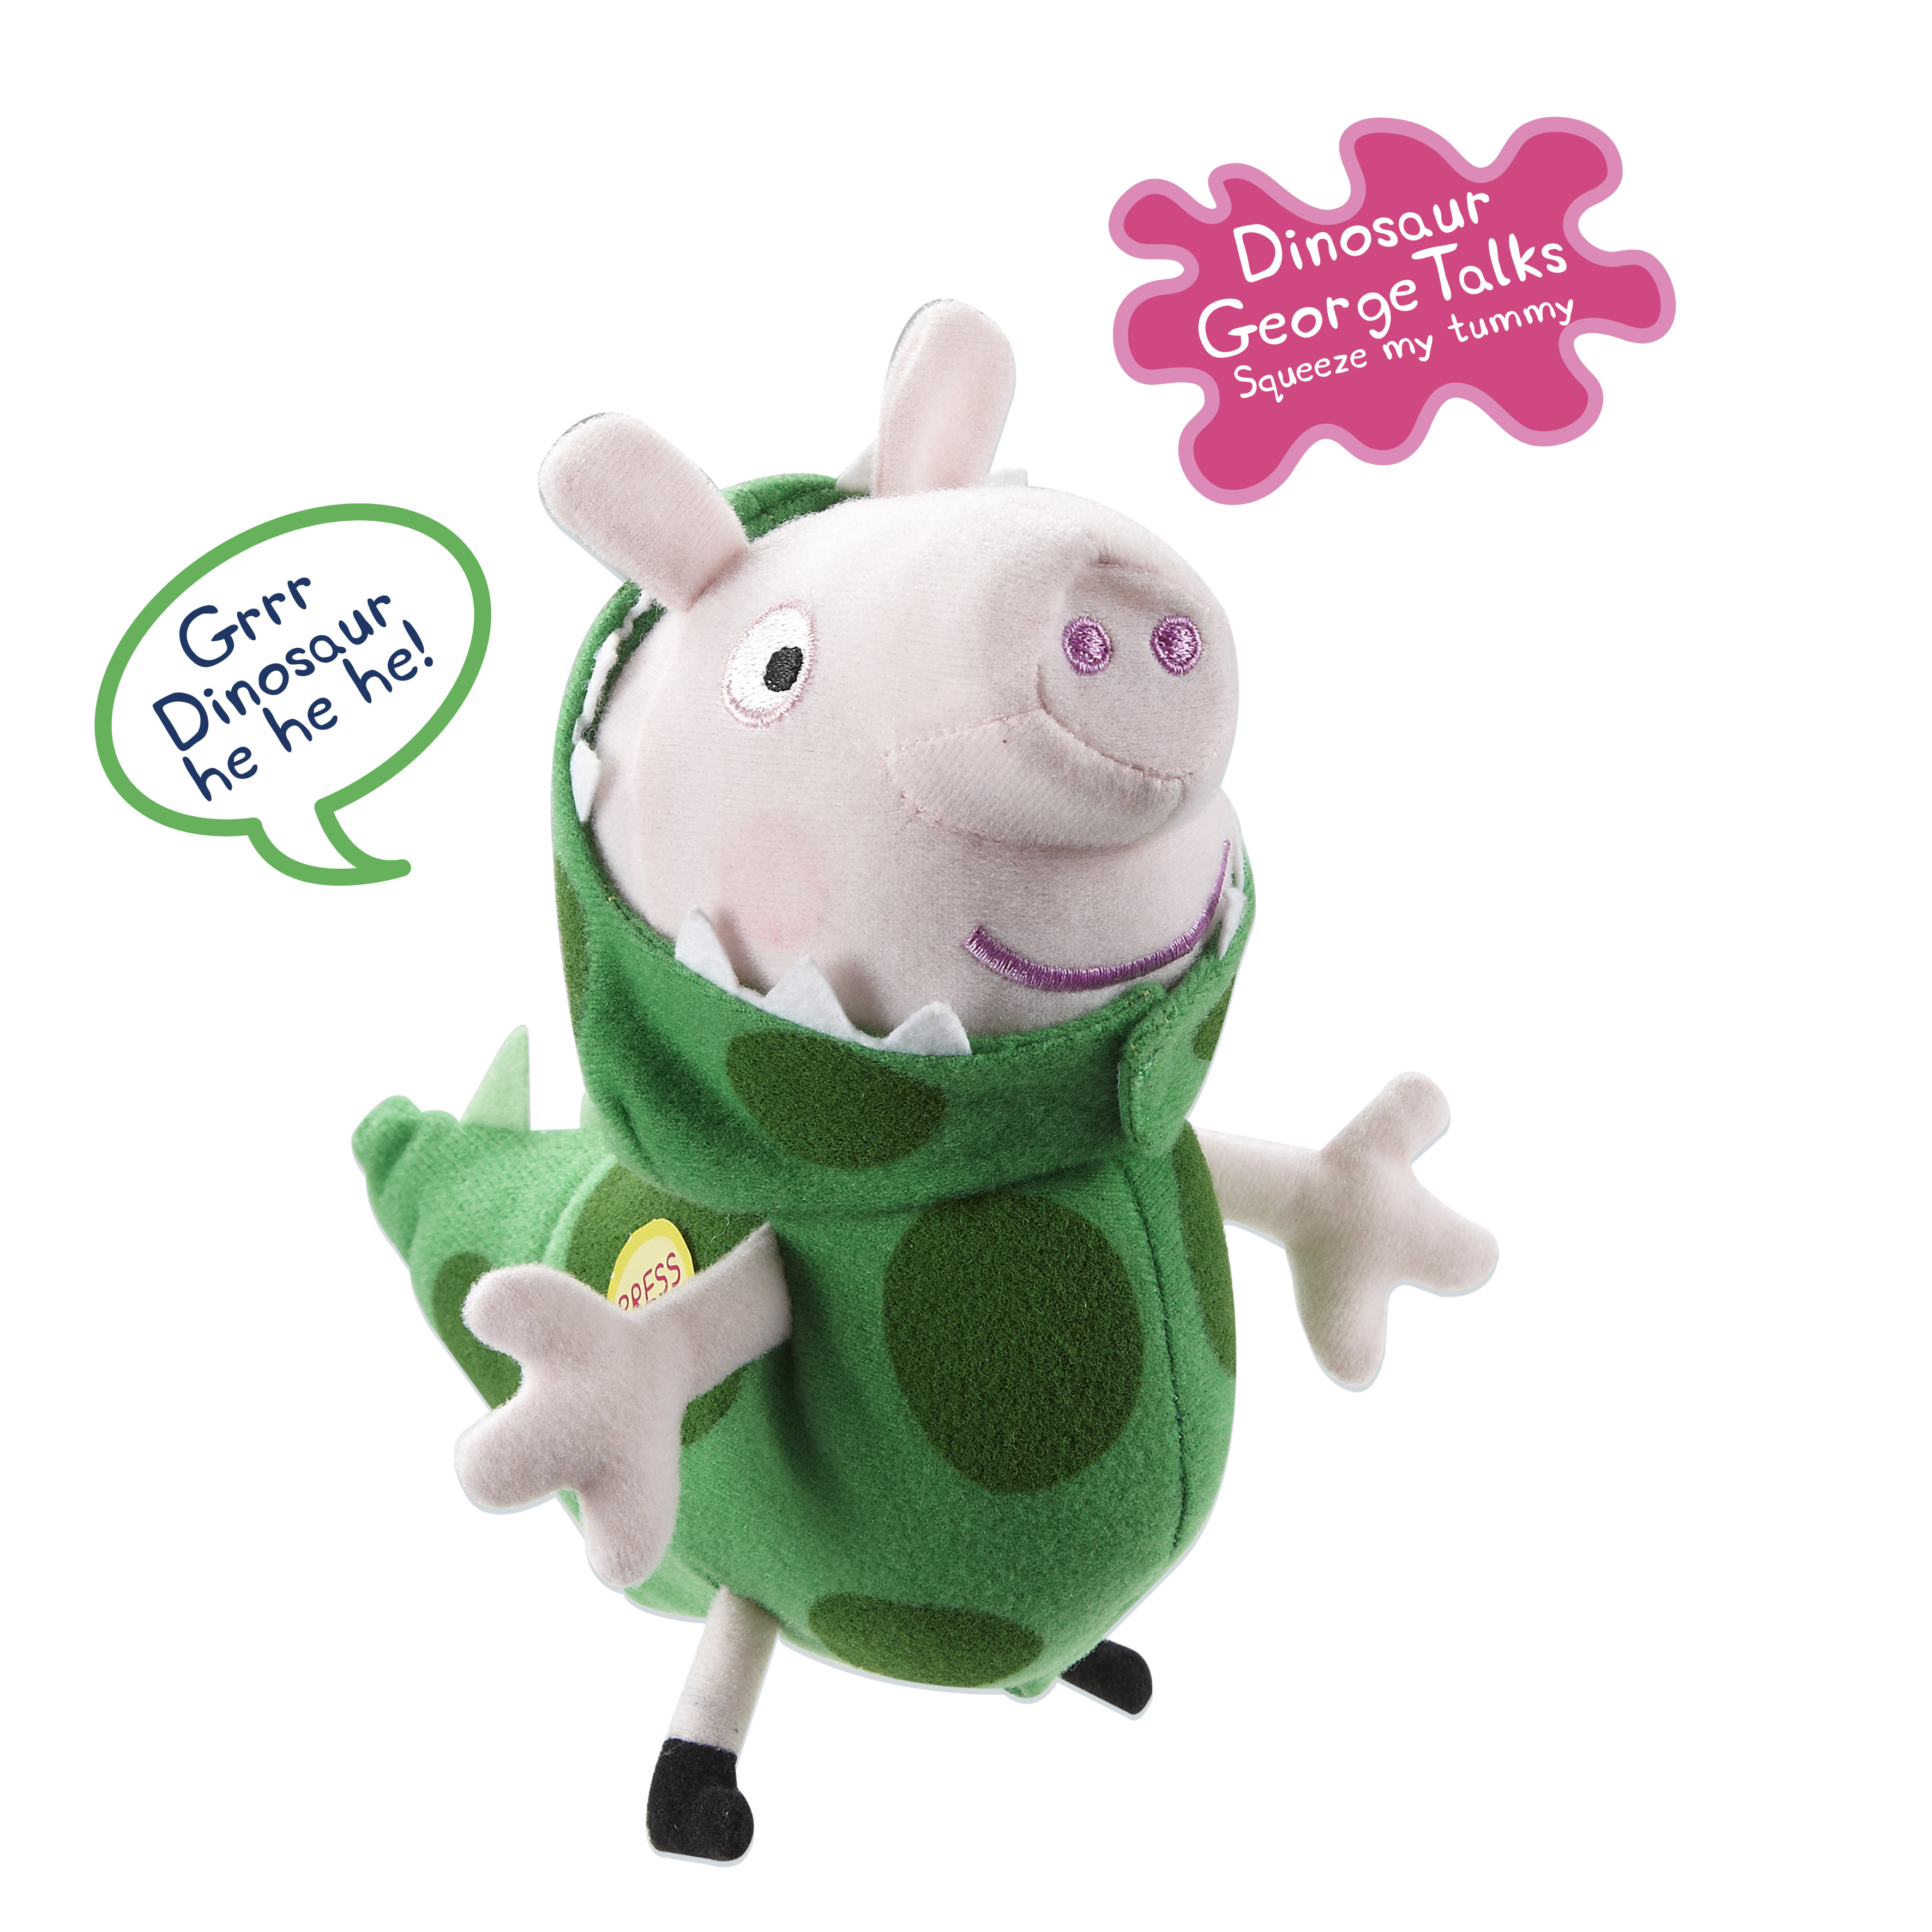 Peppa Pig 7` Talking Dinosaur George